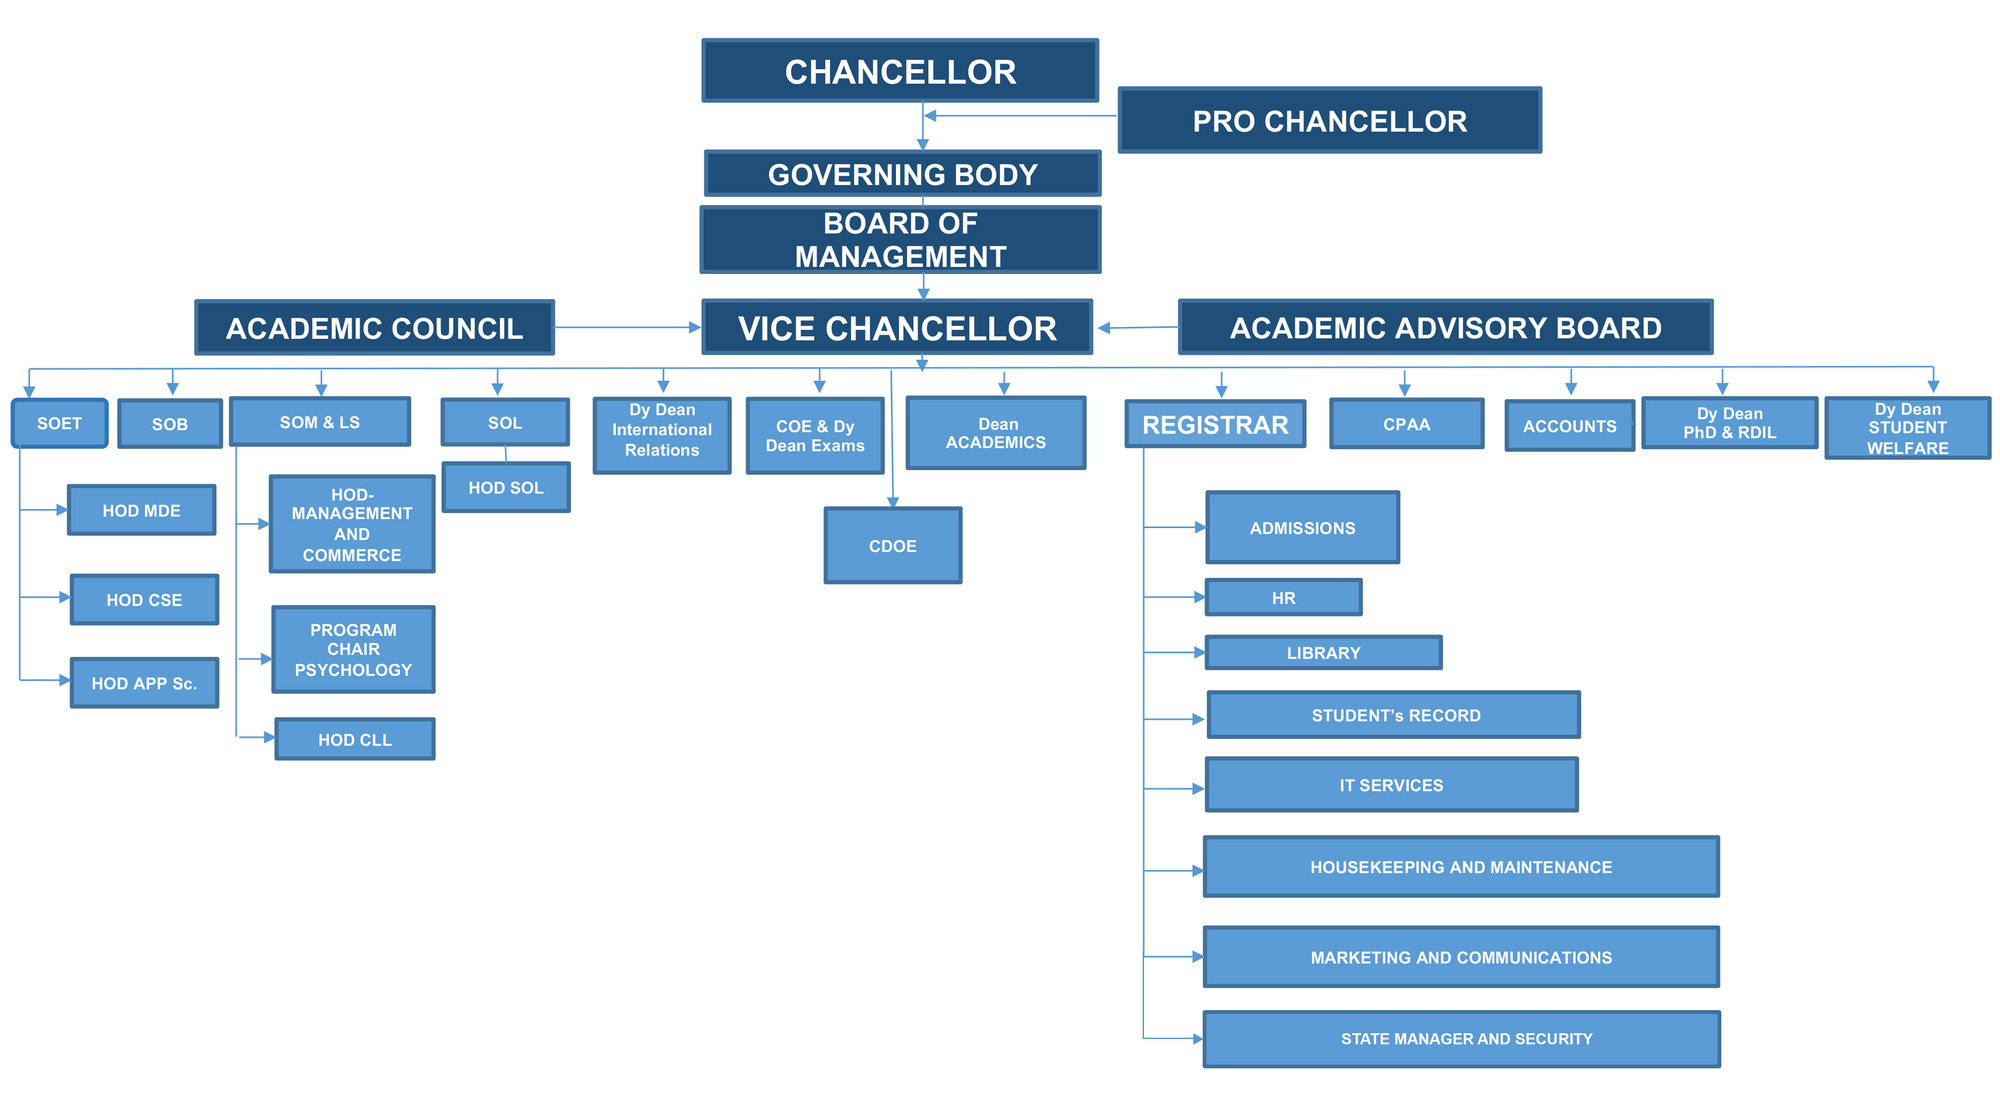 Organisational Chart